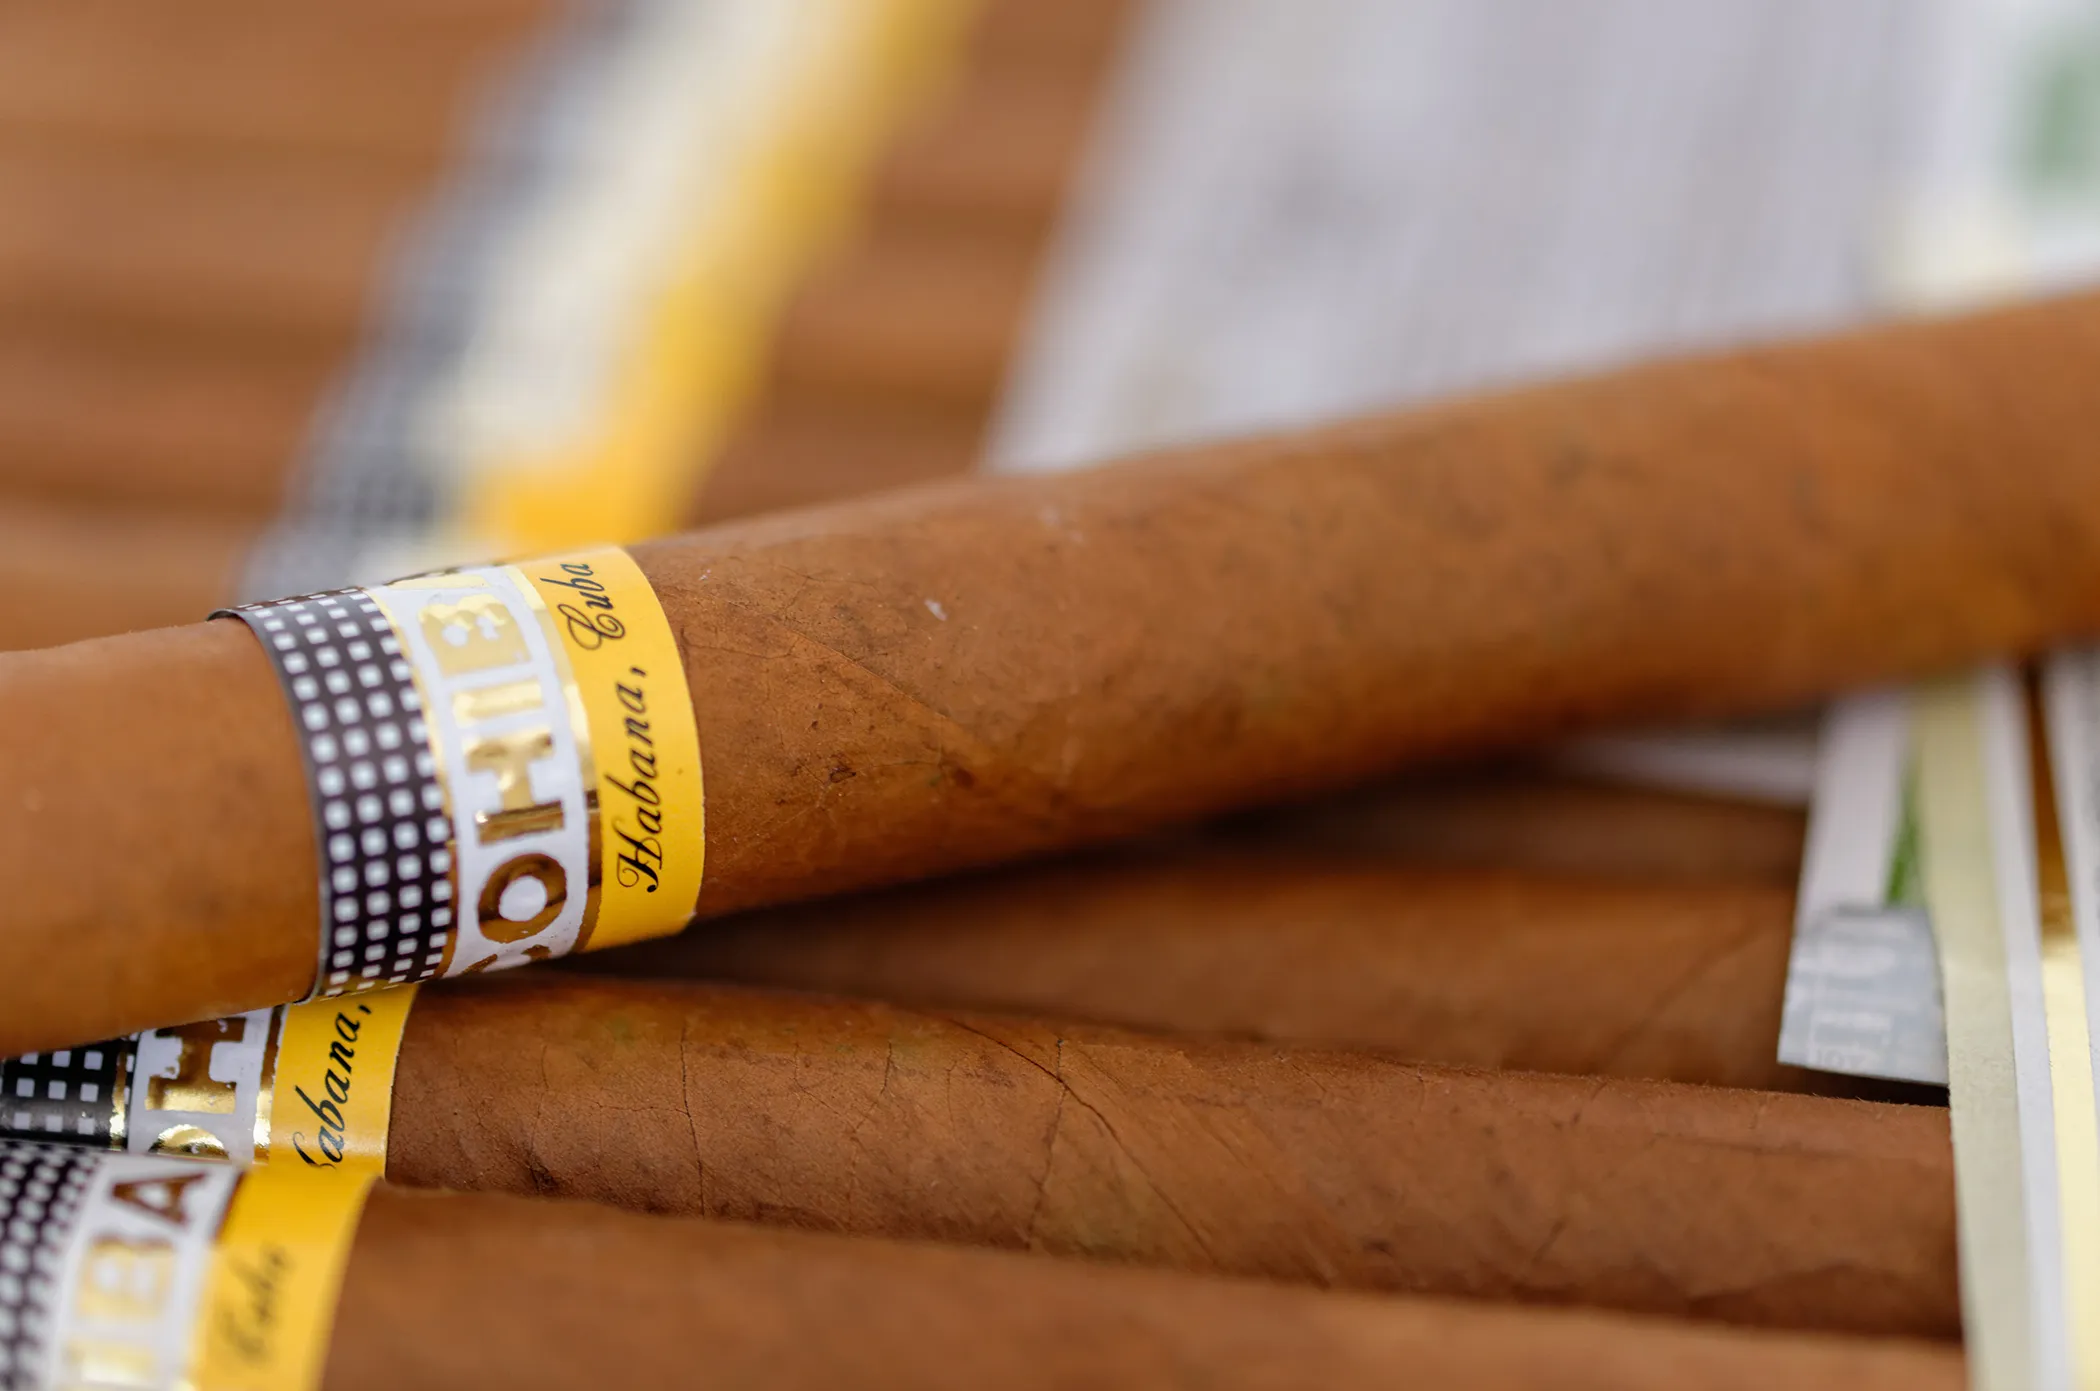 cohiba cuban cigars